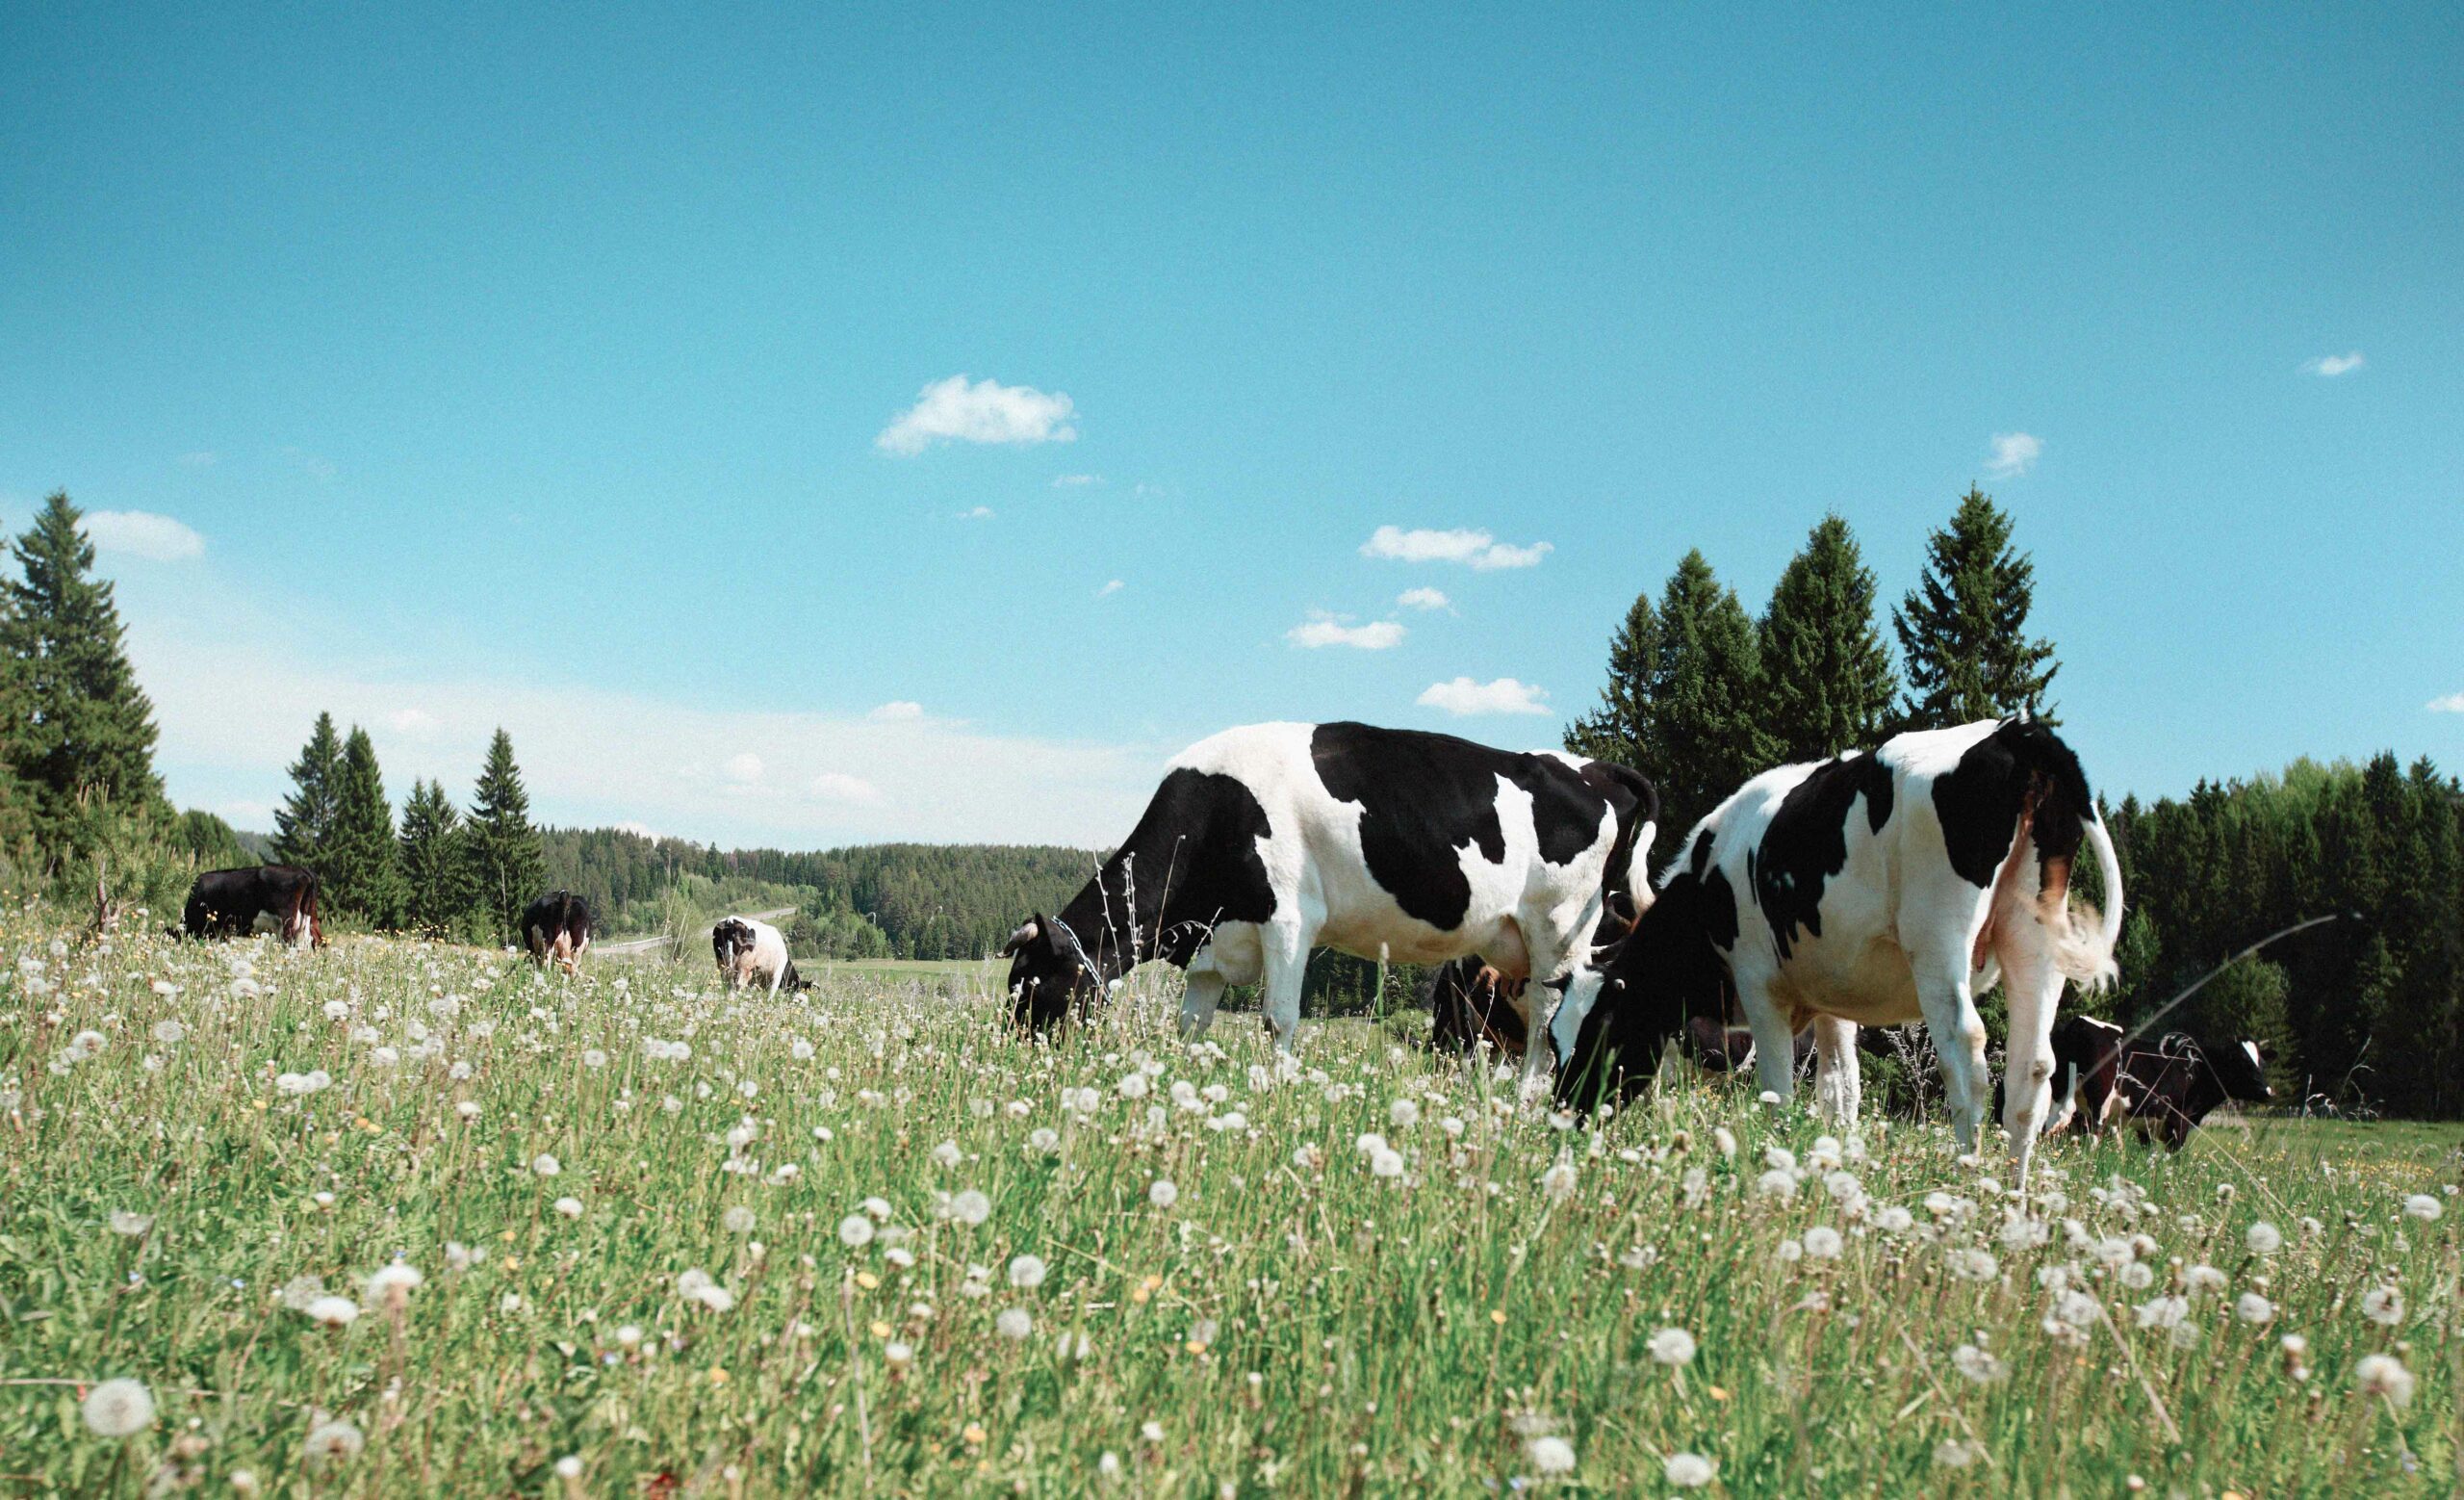 Michigan Cows Grazing in Dandelion Field